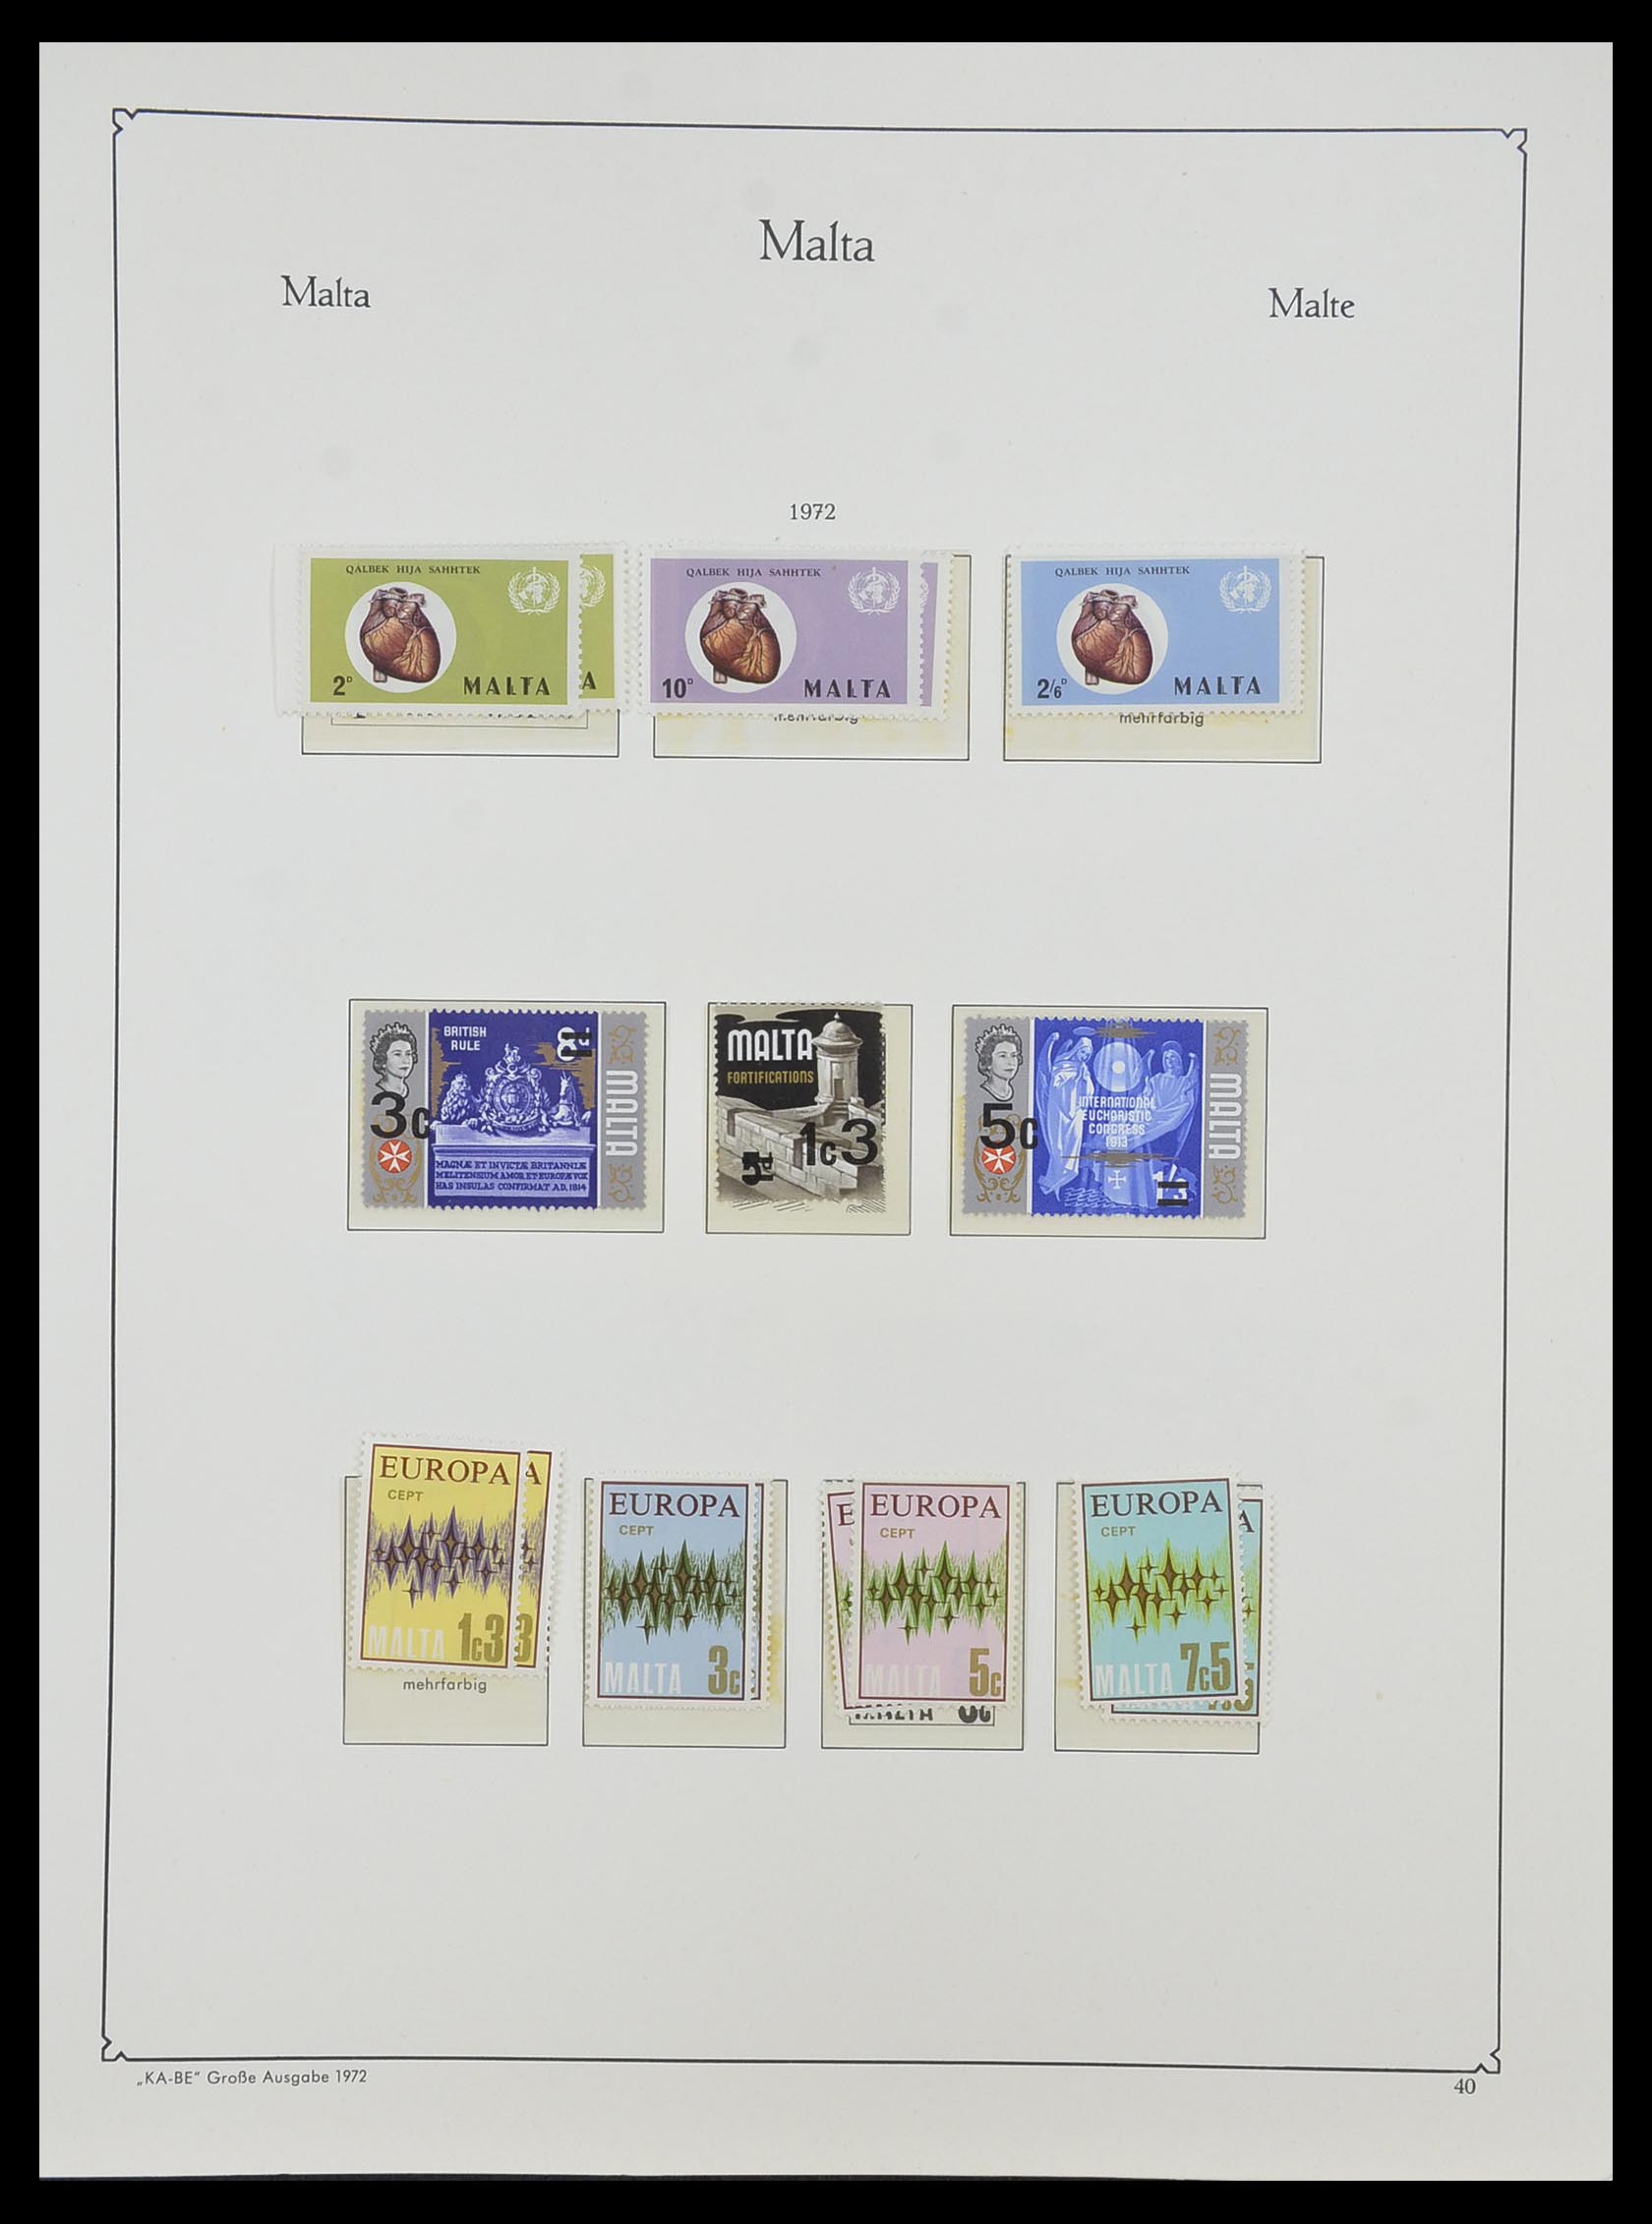 33968 110 - Stamp collection 33968 Malta 1861-2001.